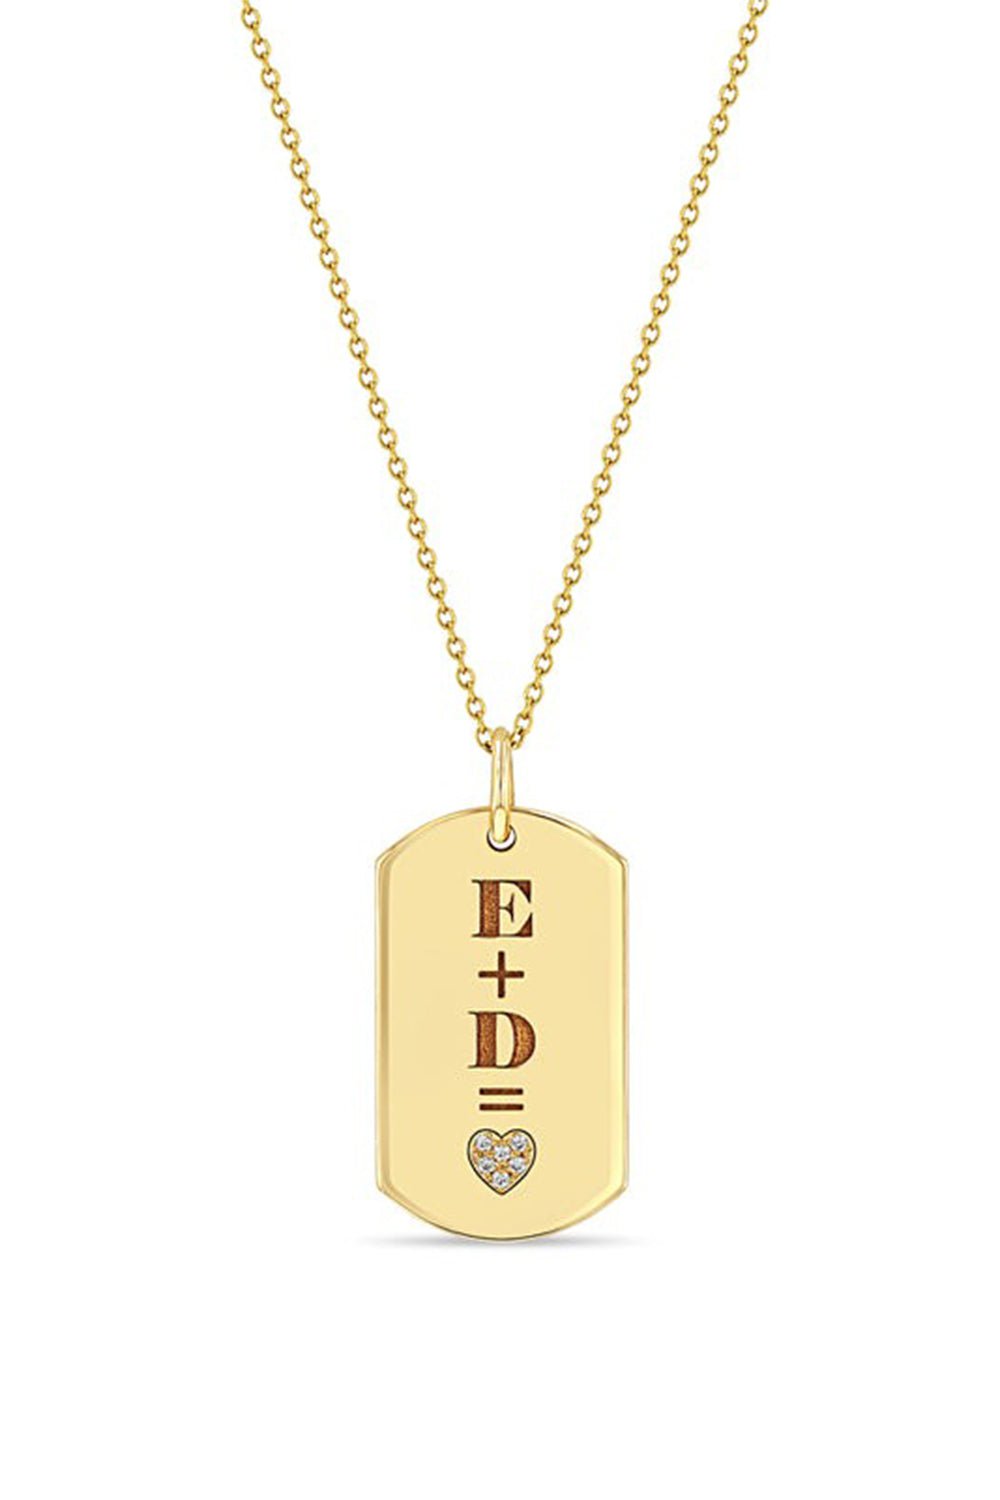 ZOE CHICCO-Diamond Heart Equation Medium Dog Tag Necklace-YELLOW GOLD